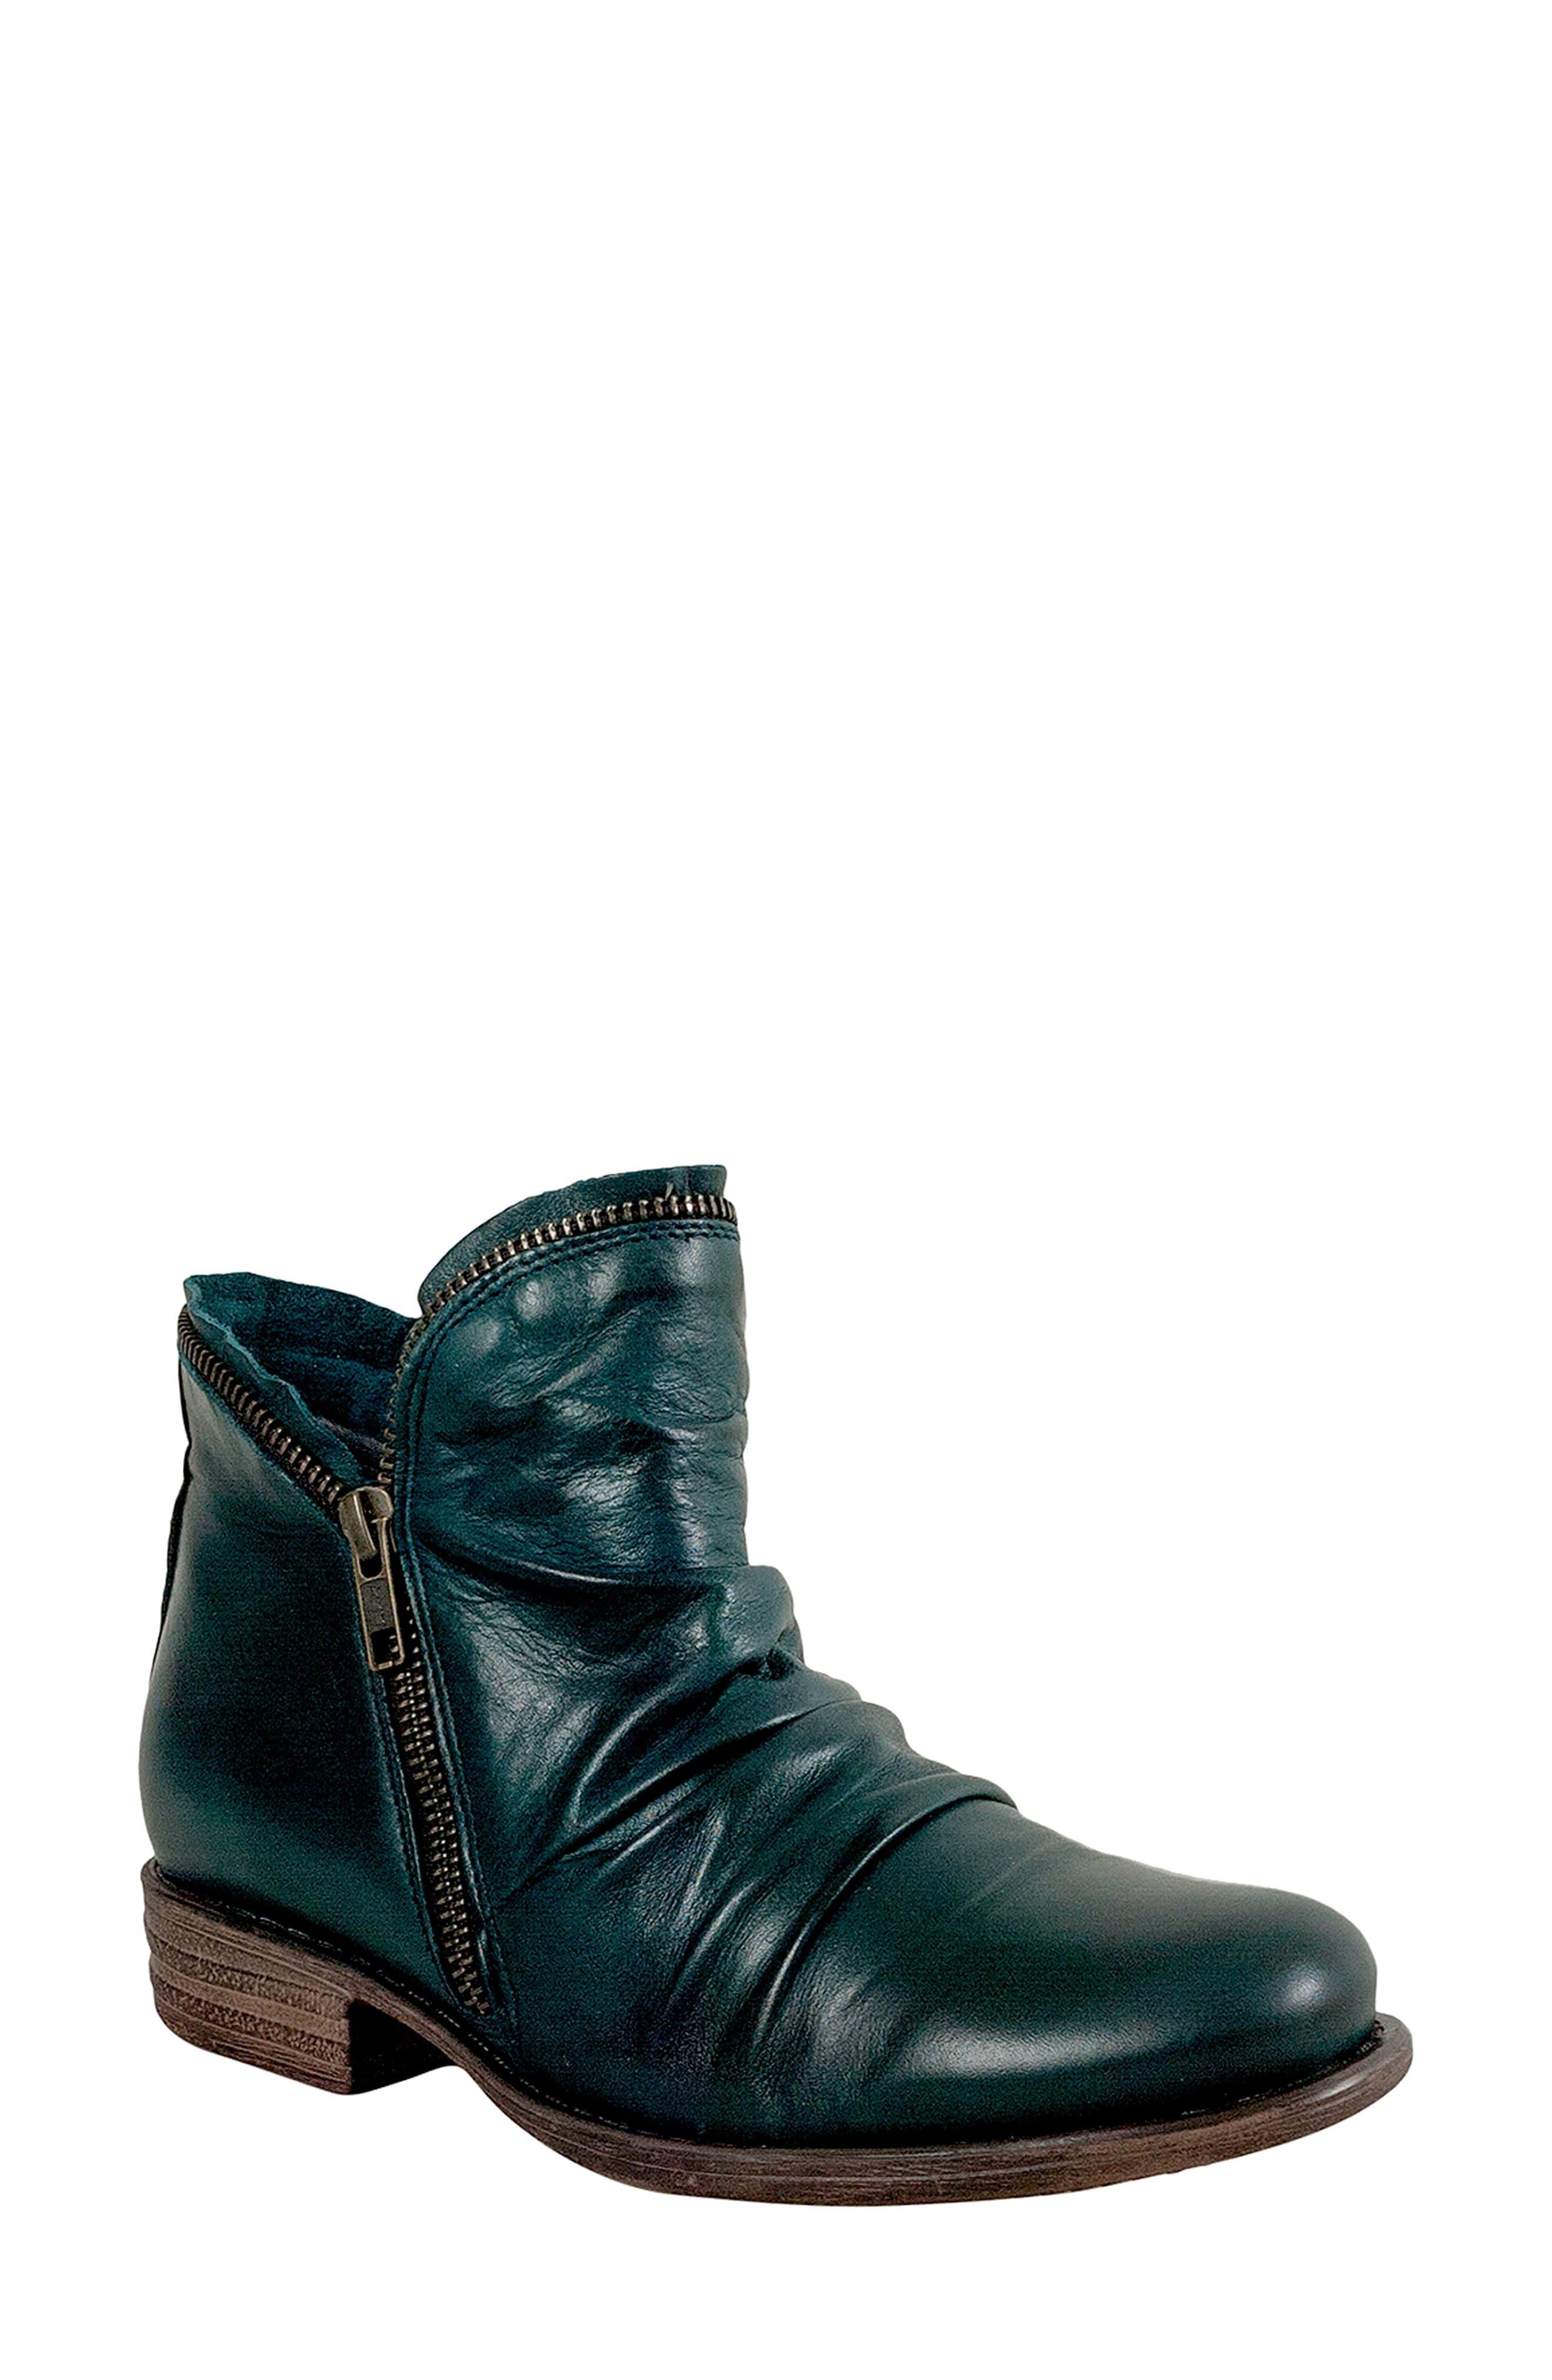 Miz Mooz Leather 'luna' Ankle Boot in Green - Lyst